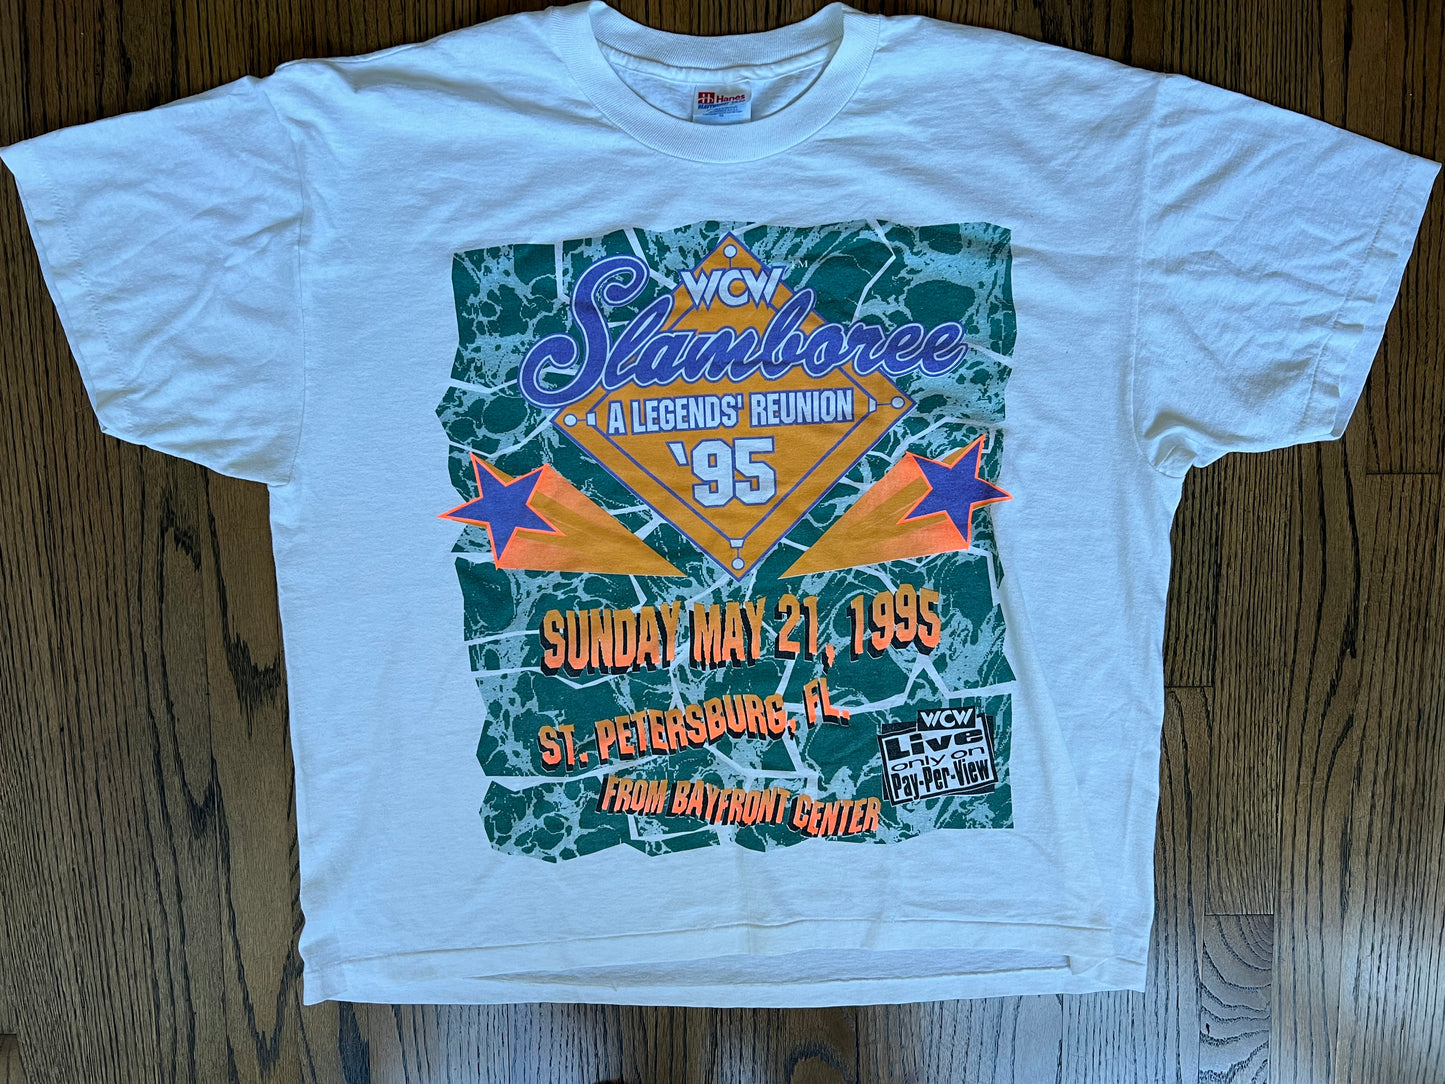 1995 WCW Slamboree: A Legend’s Reunion shirt